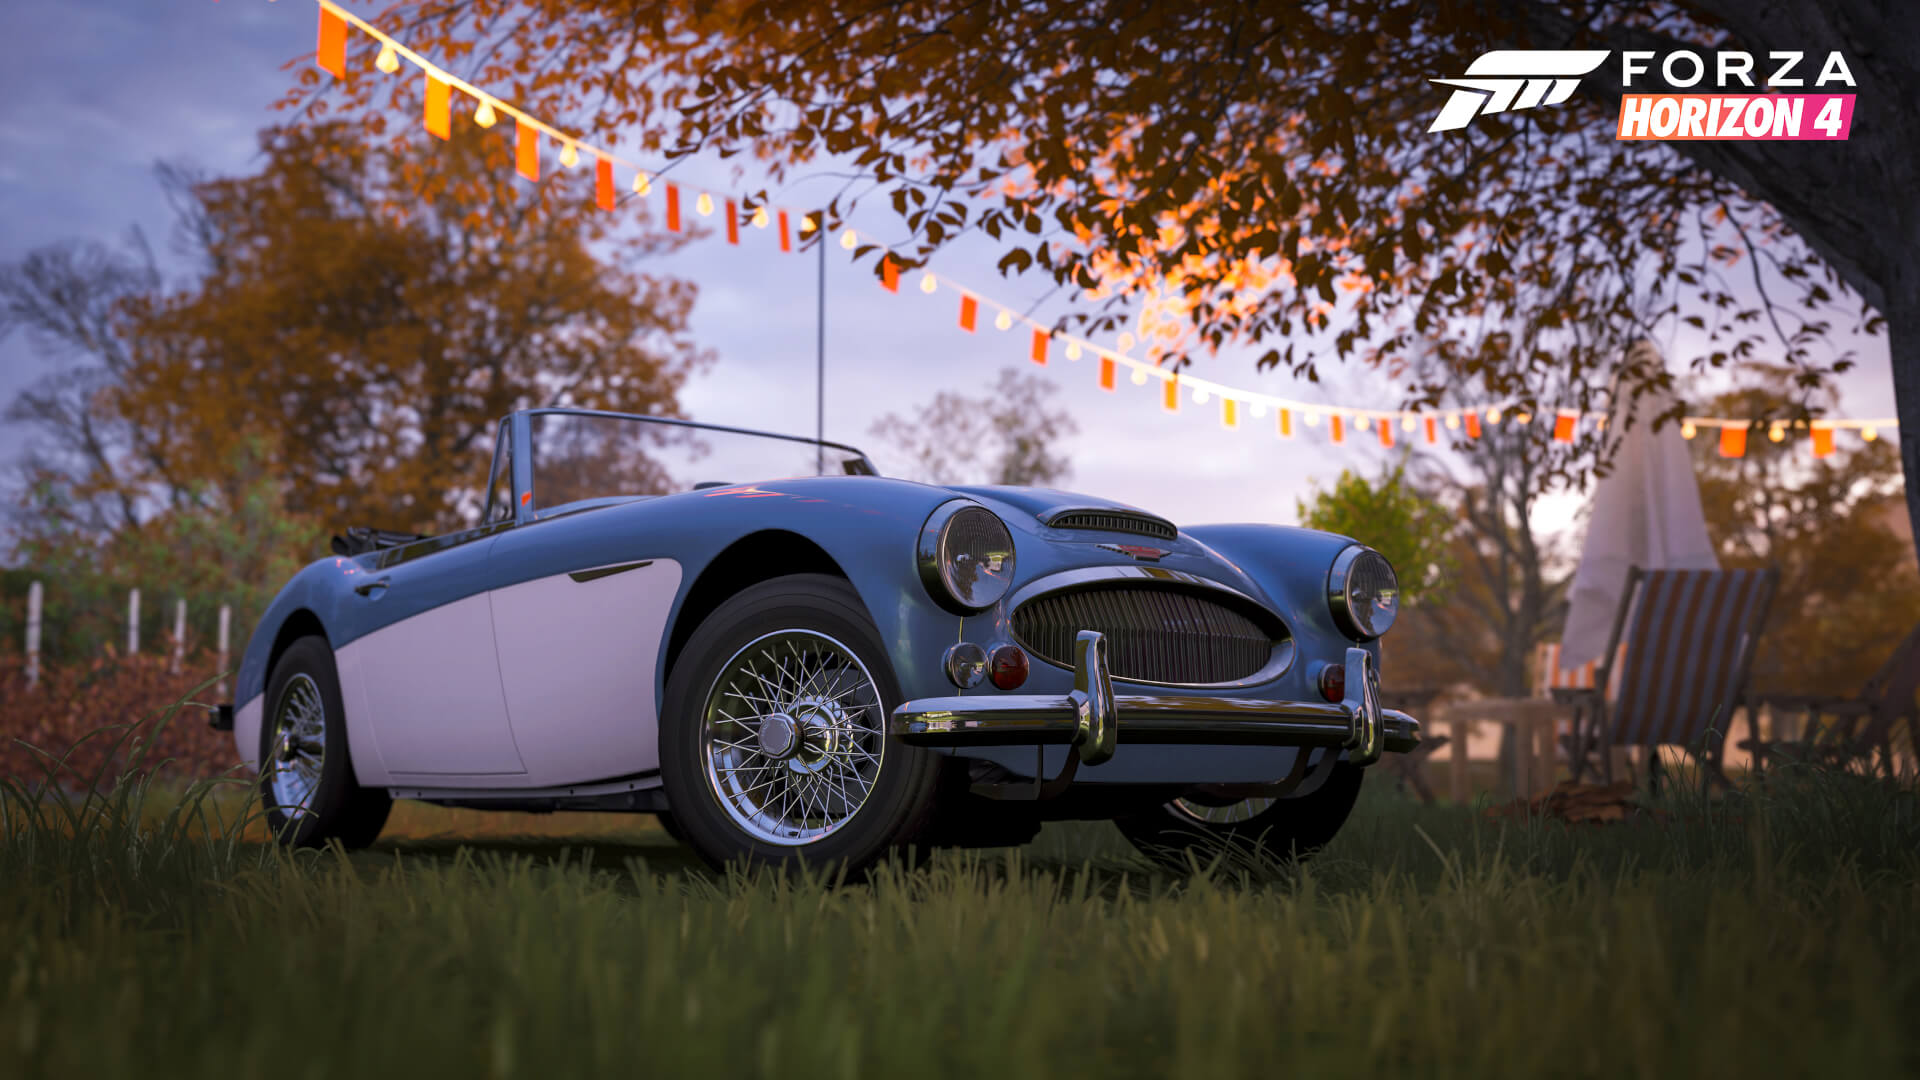 Forza Horizon 4 Car Pass - DLC - Xbox One, Win - download - ESD